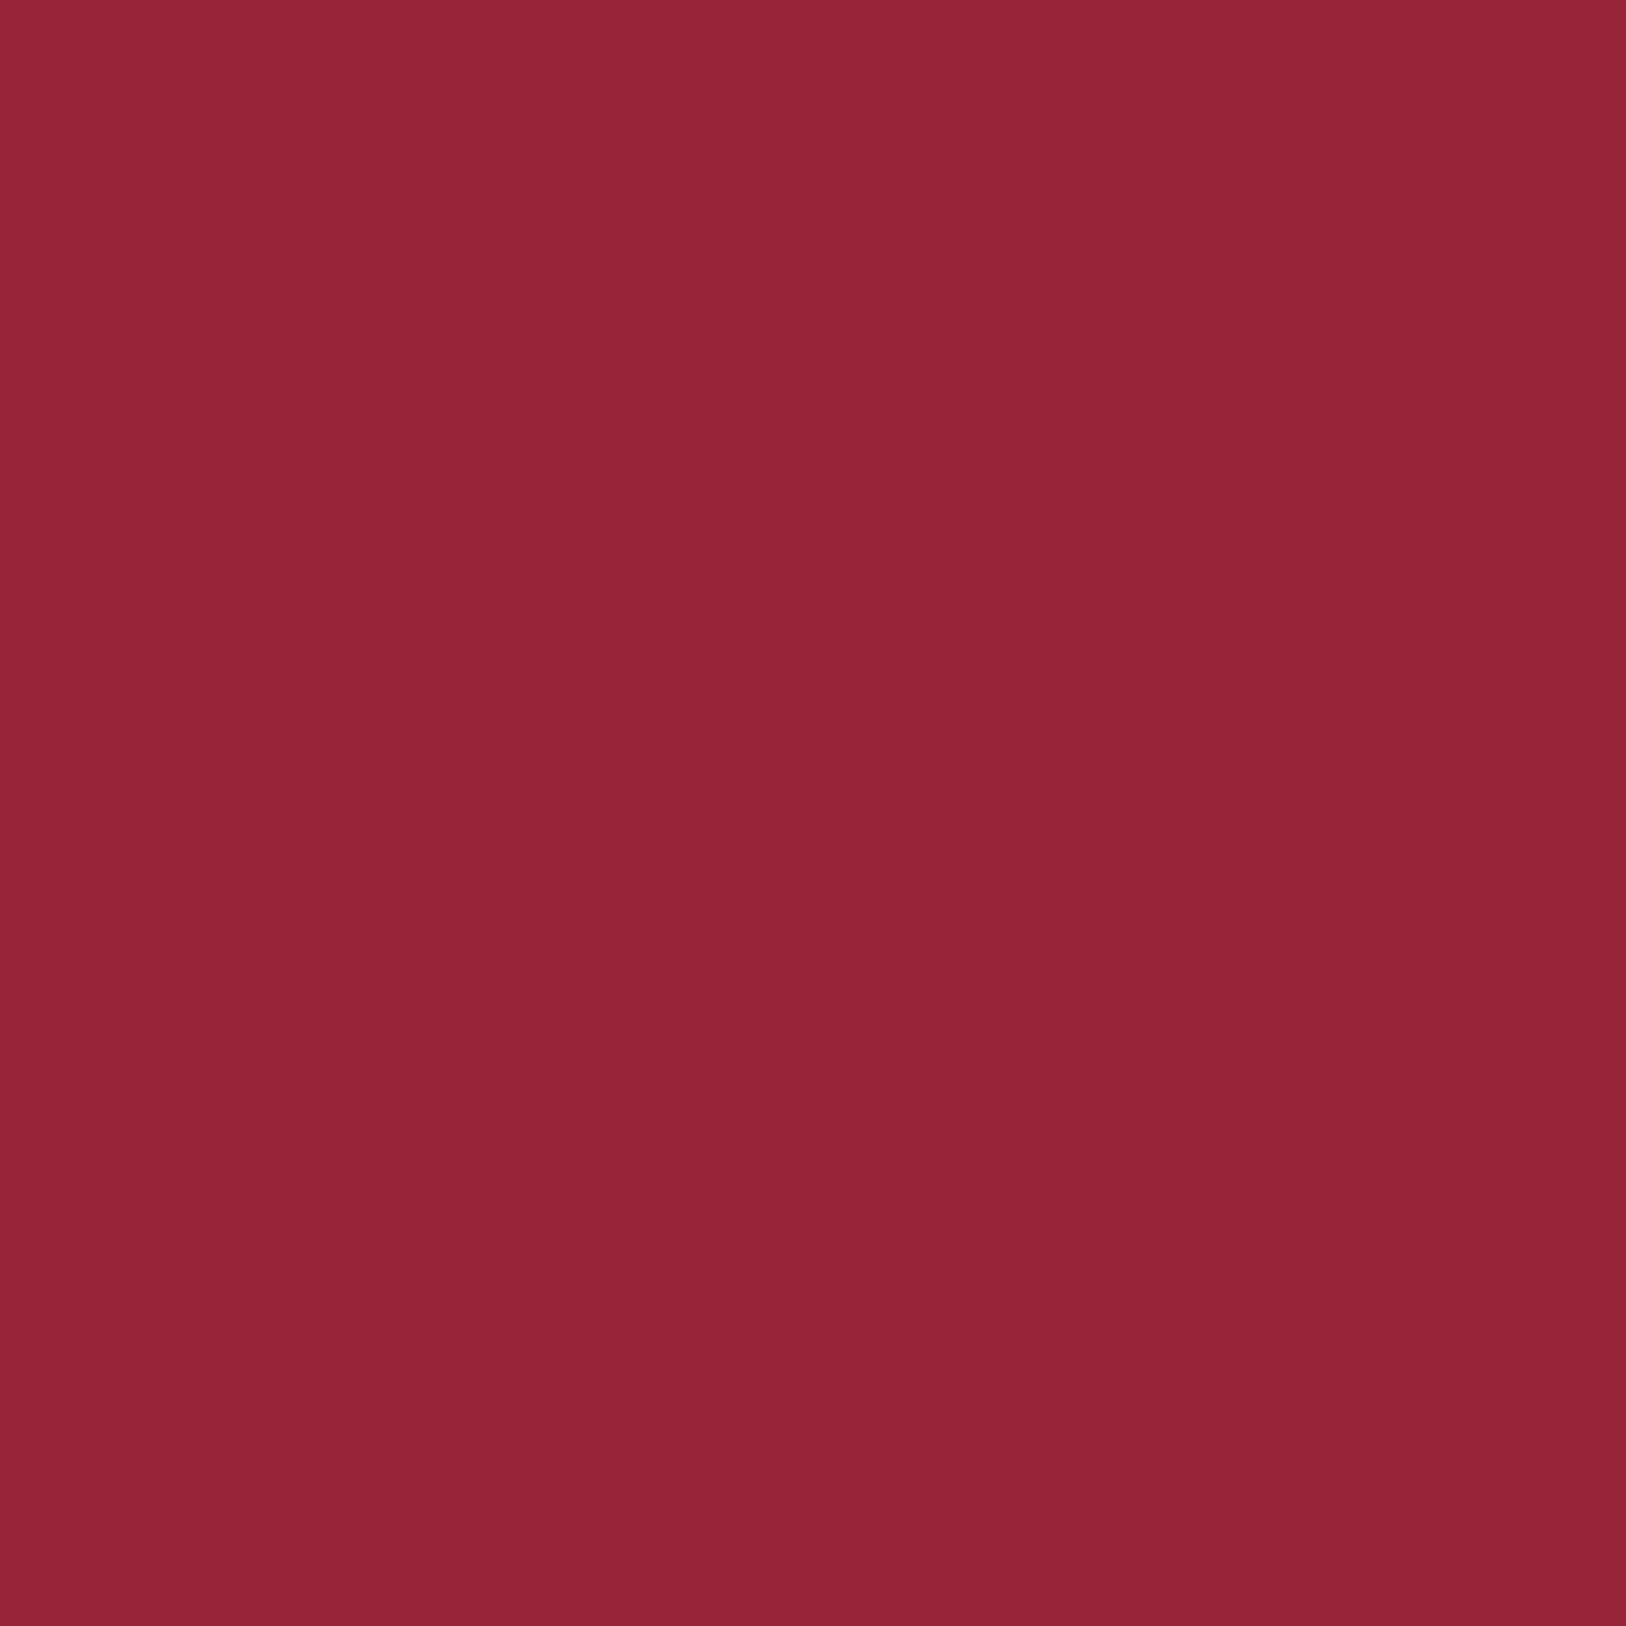 Plain Red Matte Background